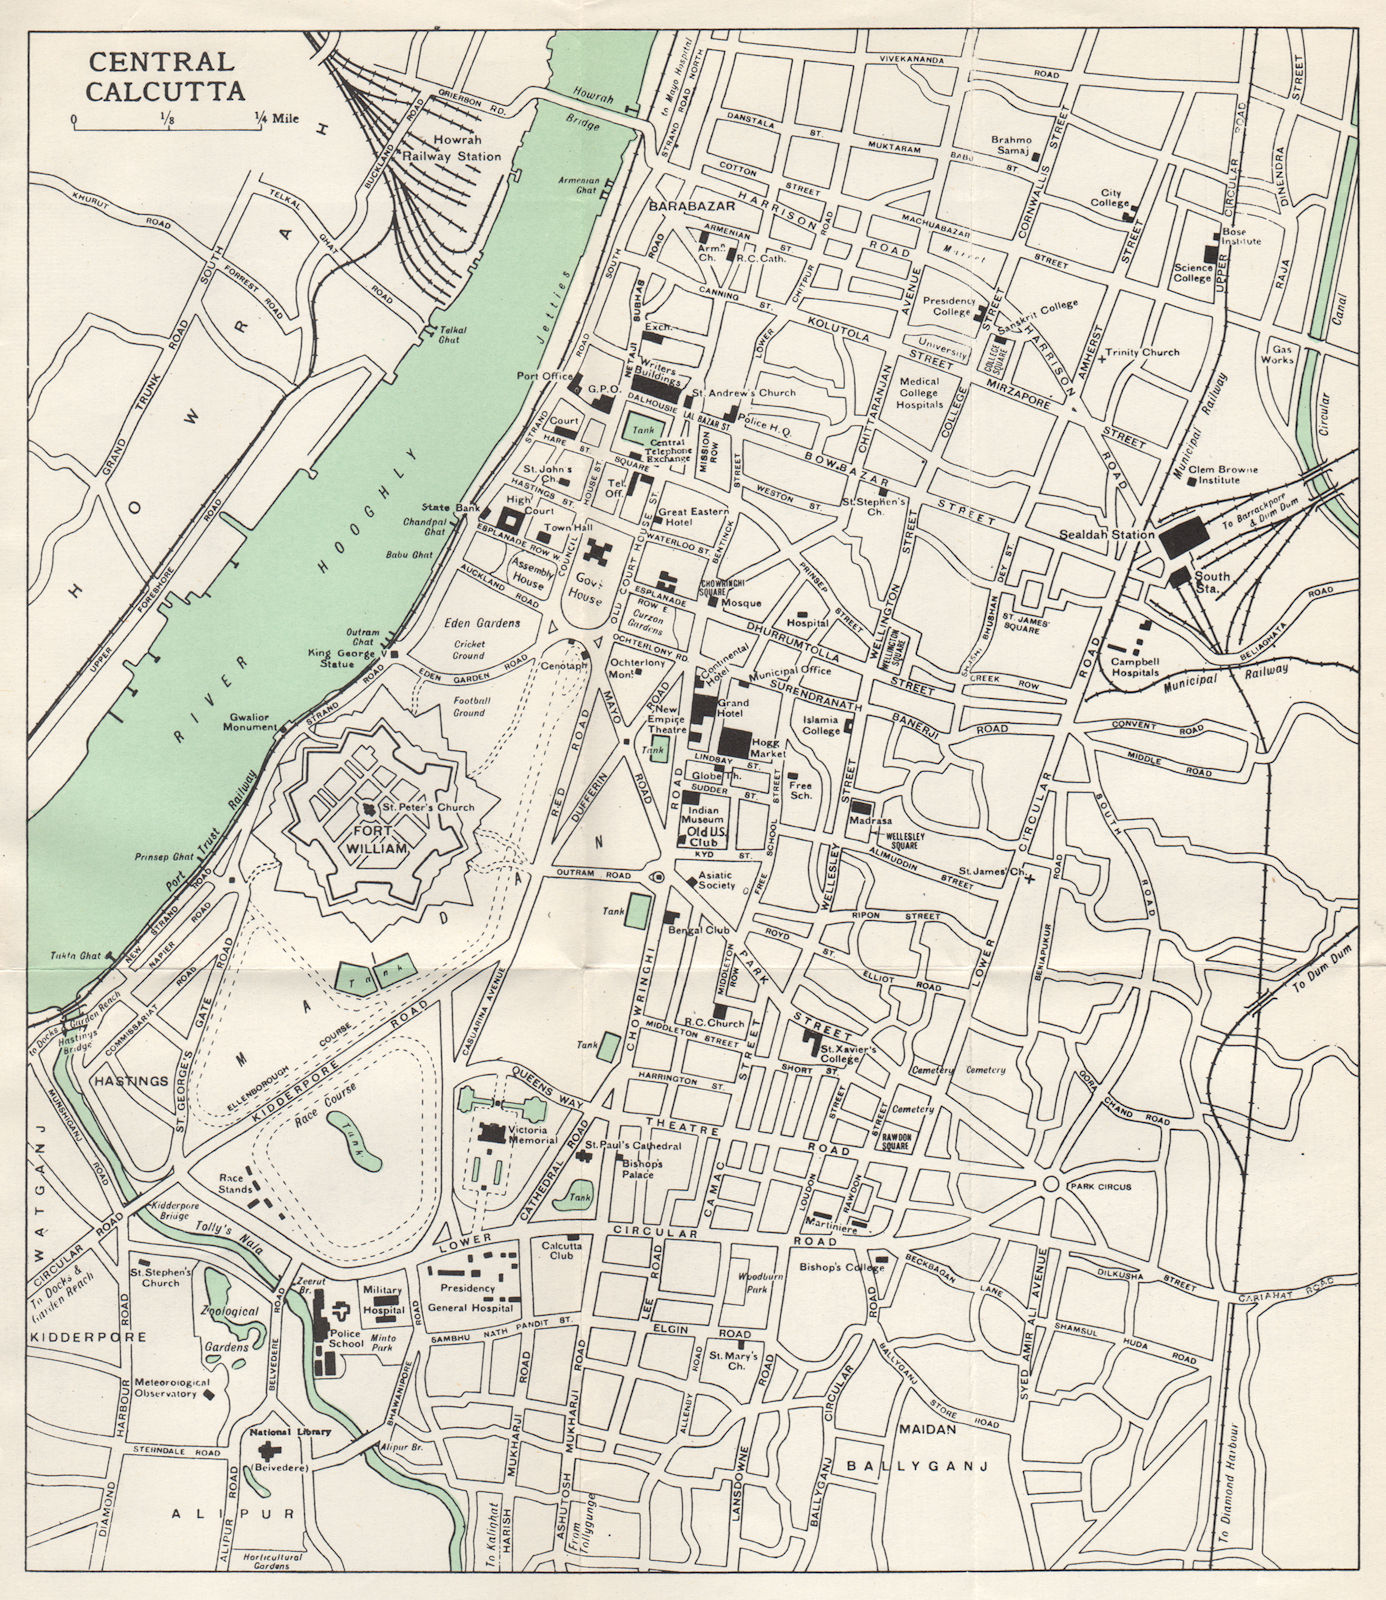 CALCUTTA. Kolkata town city plan. Fort William. Key buildings. India 1965 map